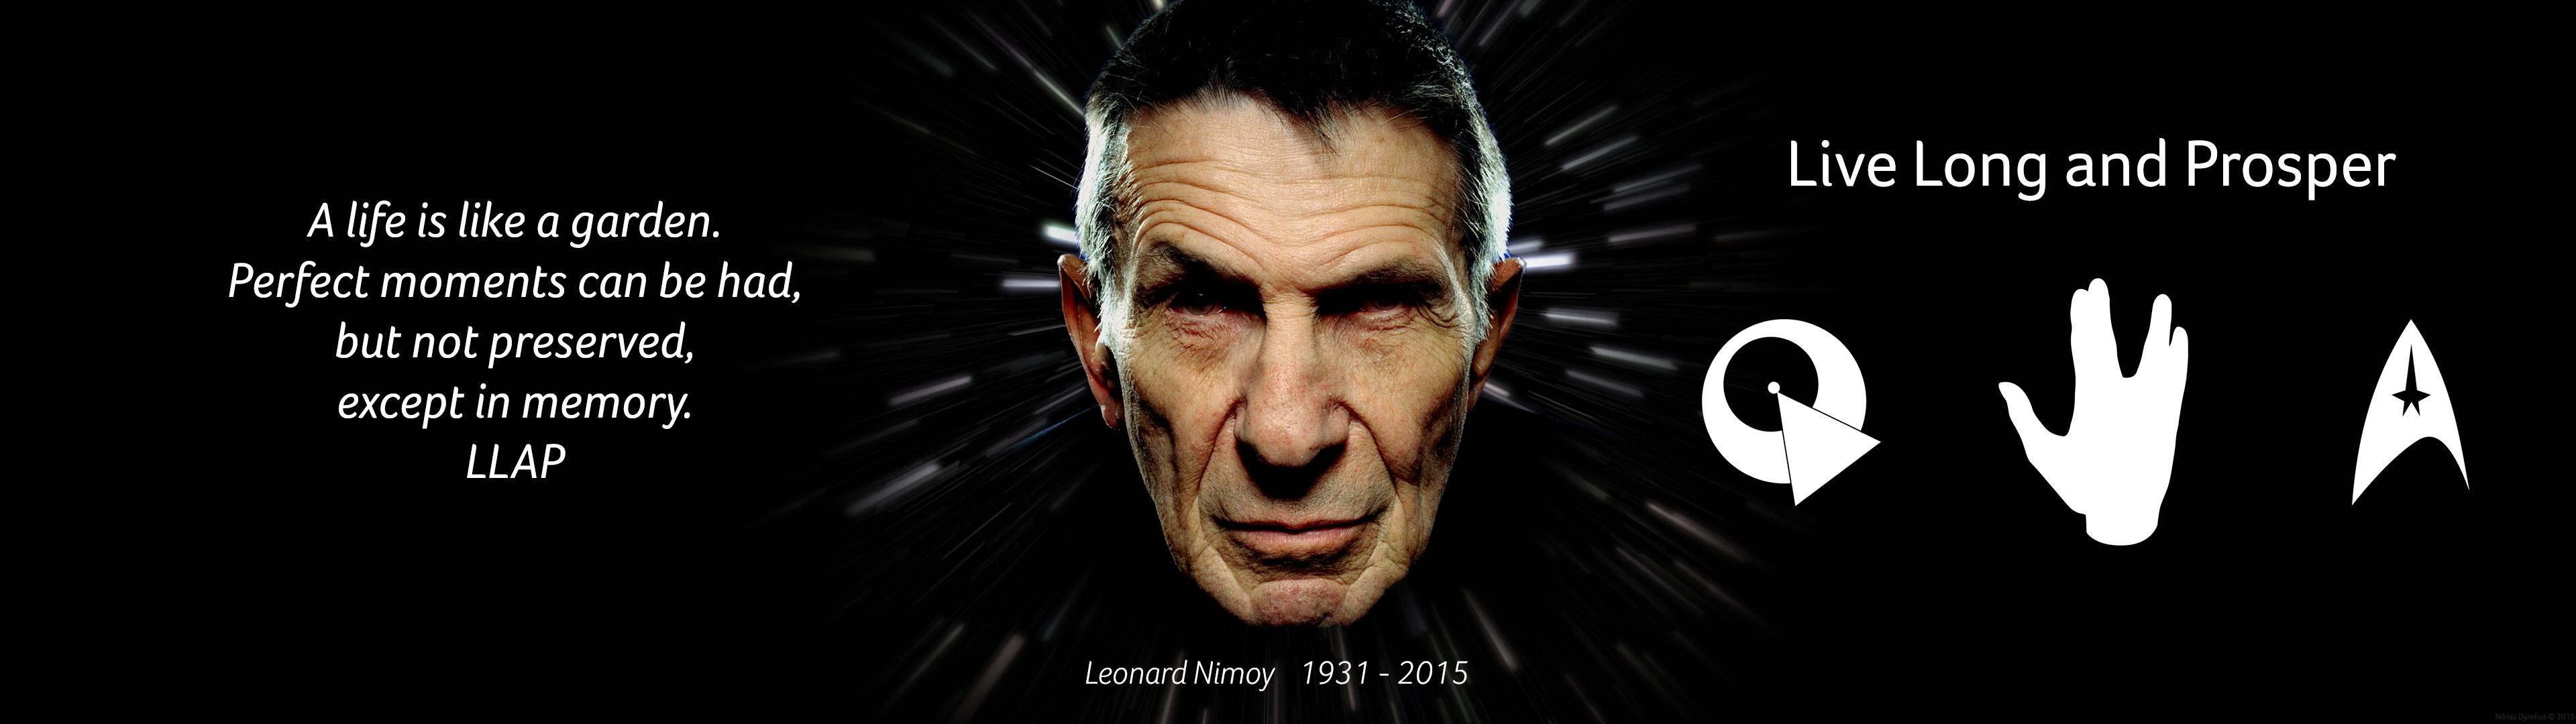 Leonard Nimoy tribute, dual screen 3840×1080